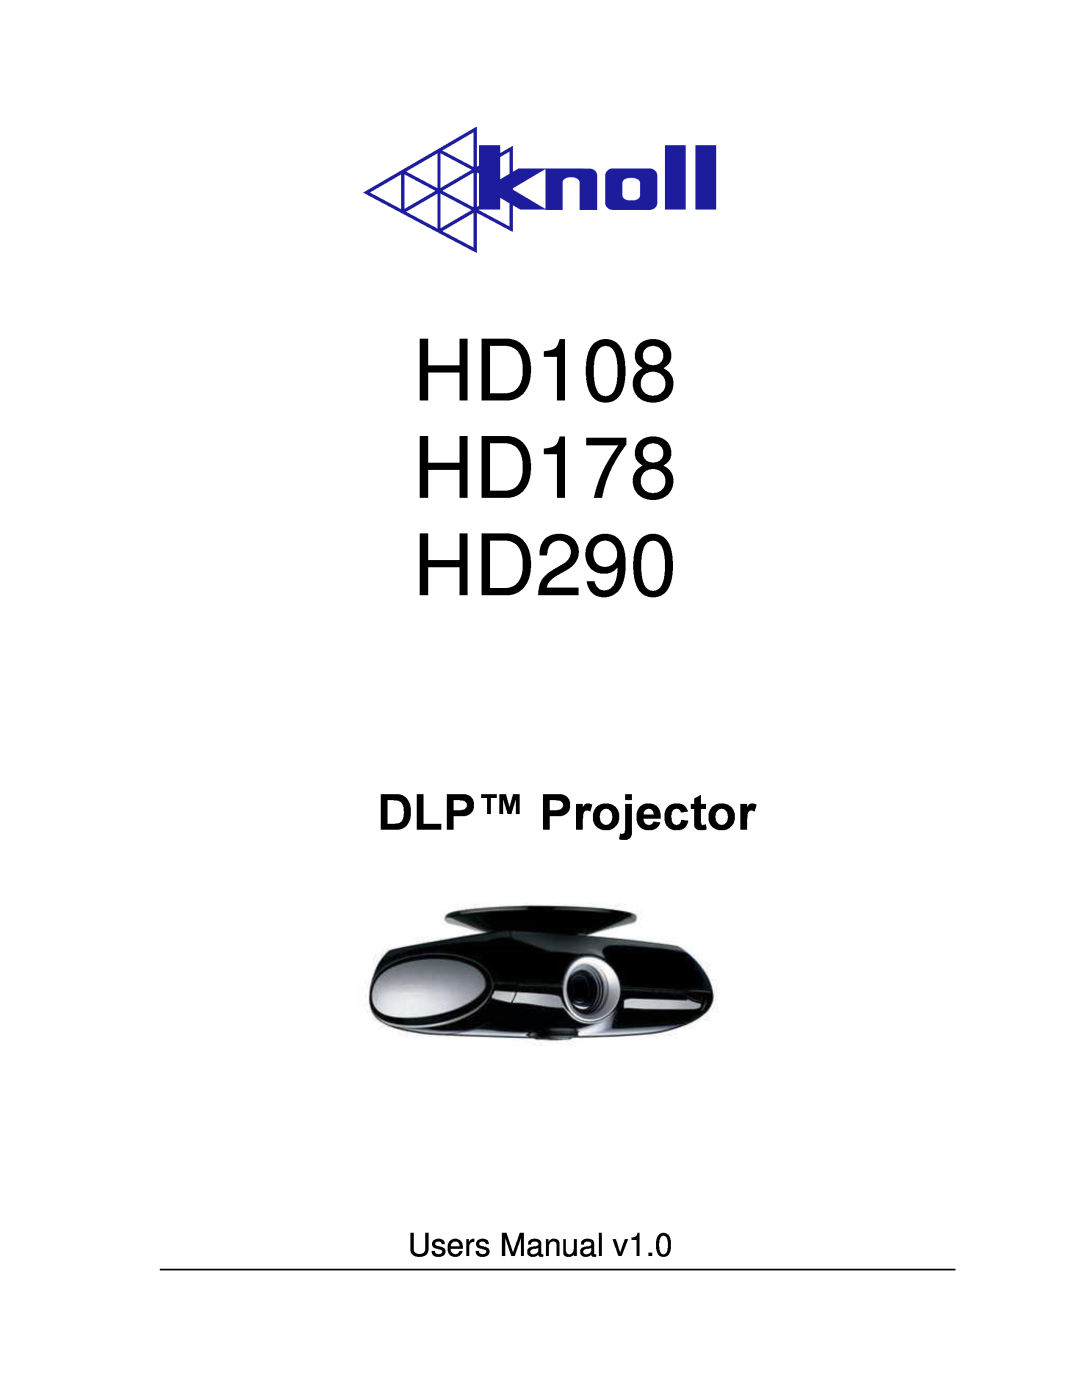 Knoll Systems user manual HD108 HD178 HD290, DLP Projector, Users Manual 